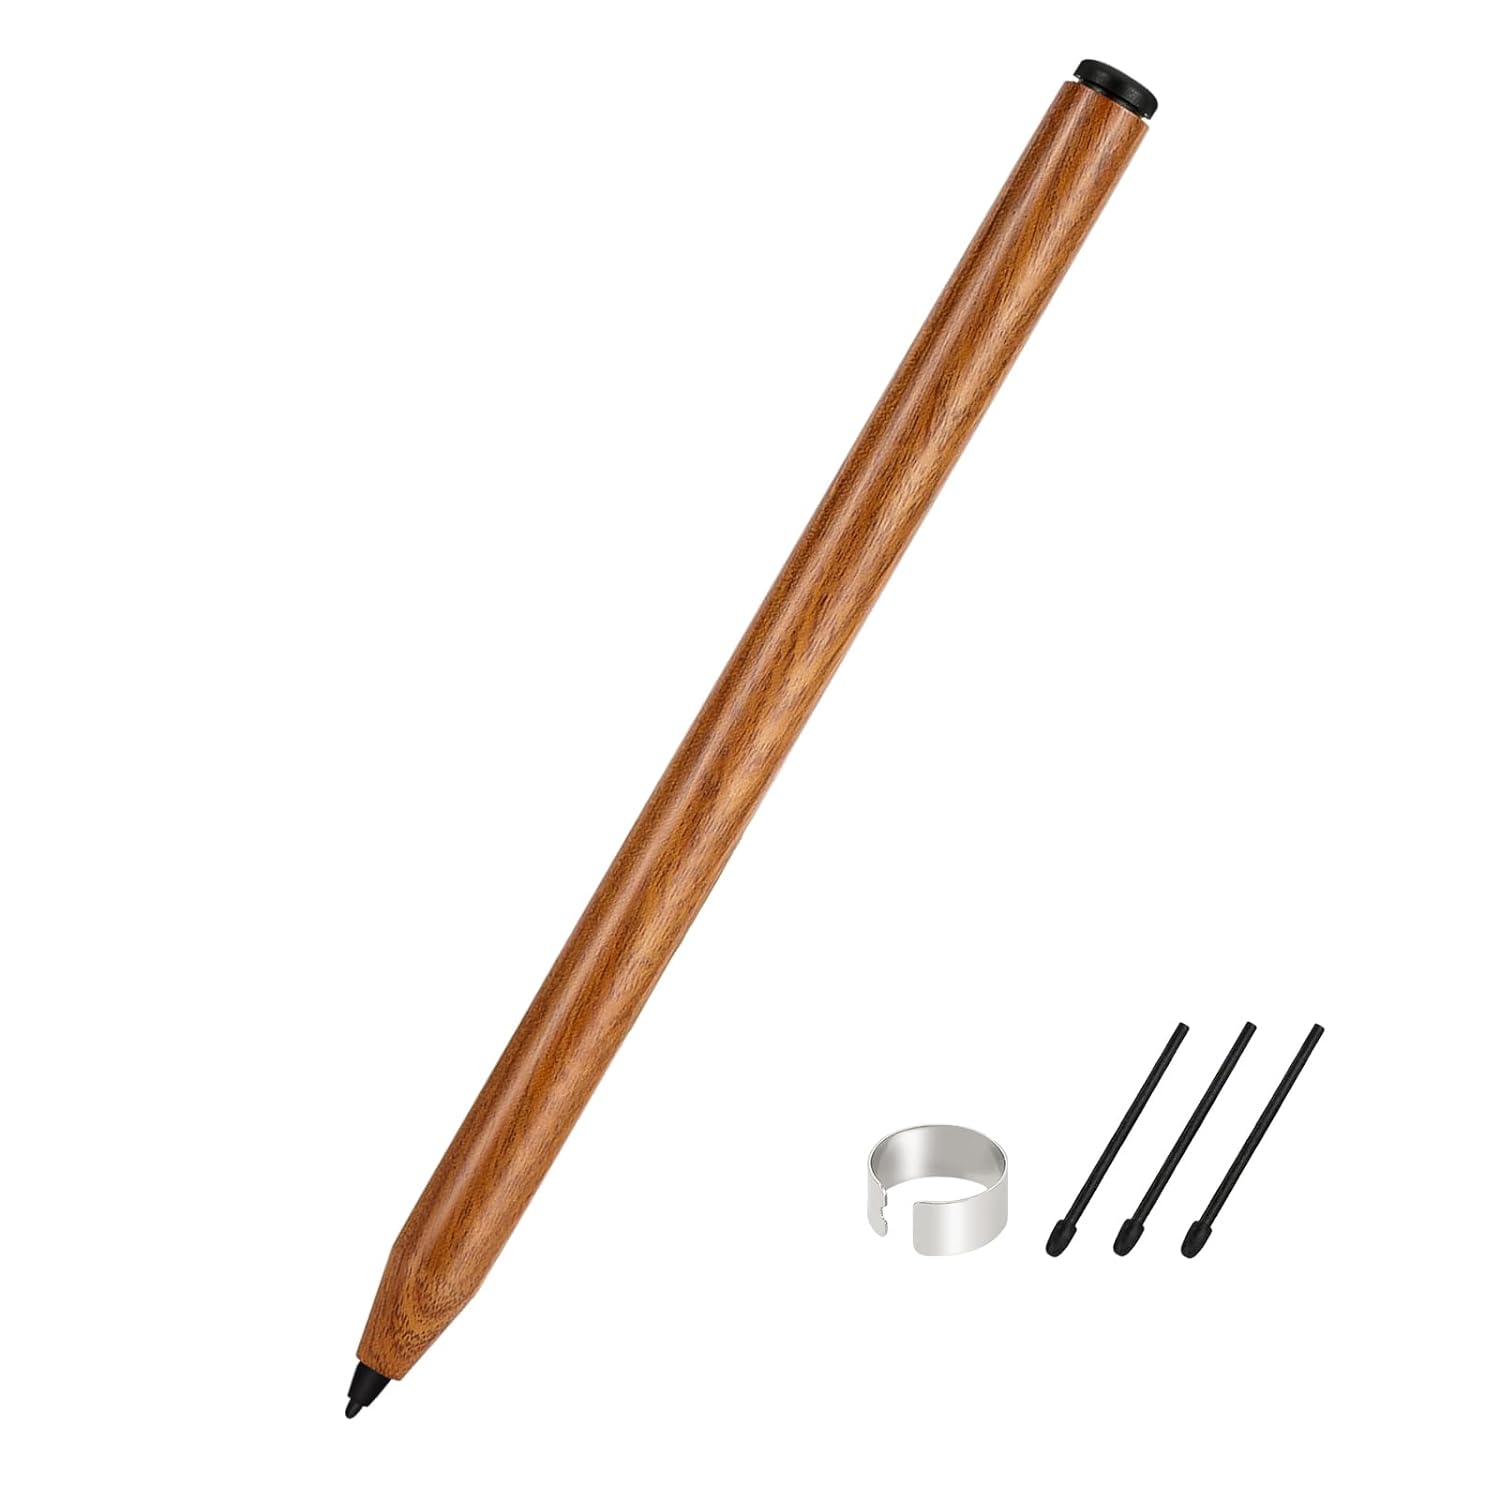 EMR Stylus for Remarkable 2 Pen with Eraser, Remarkable 2 Marker Plus Alternative Digital Replacement Pen, 4096 Pressure Sensitivity, Palm Rejection, Kindle/Samsung/Remarkable 2 with 3 Nibs